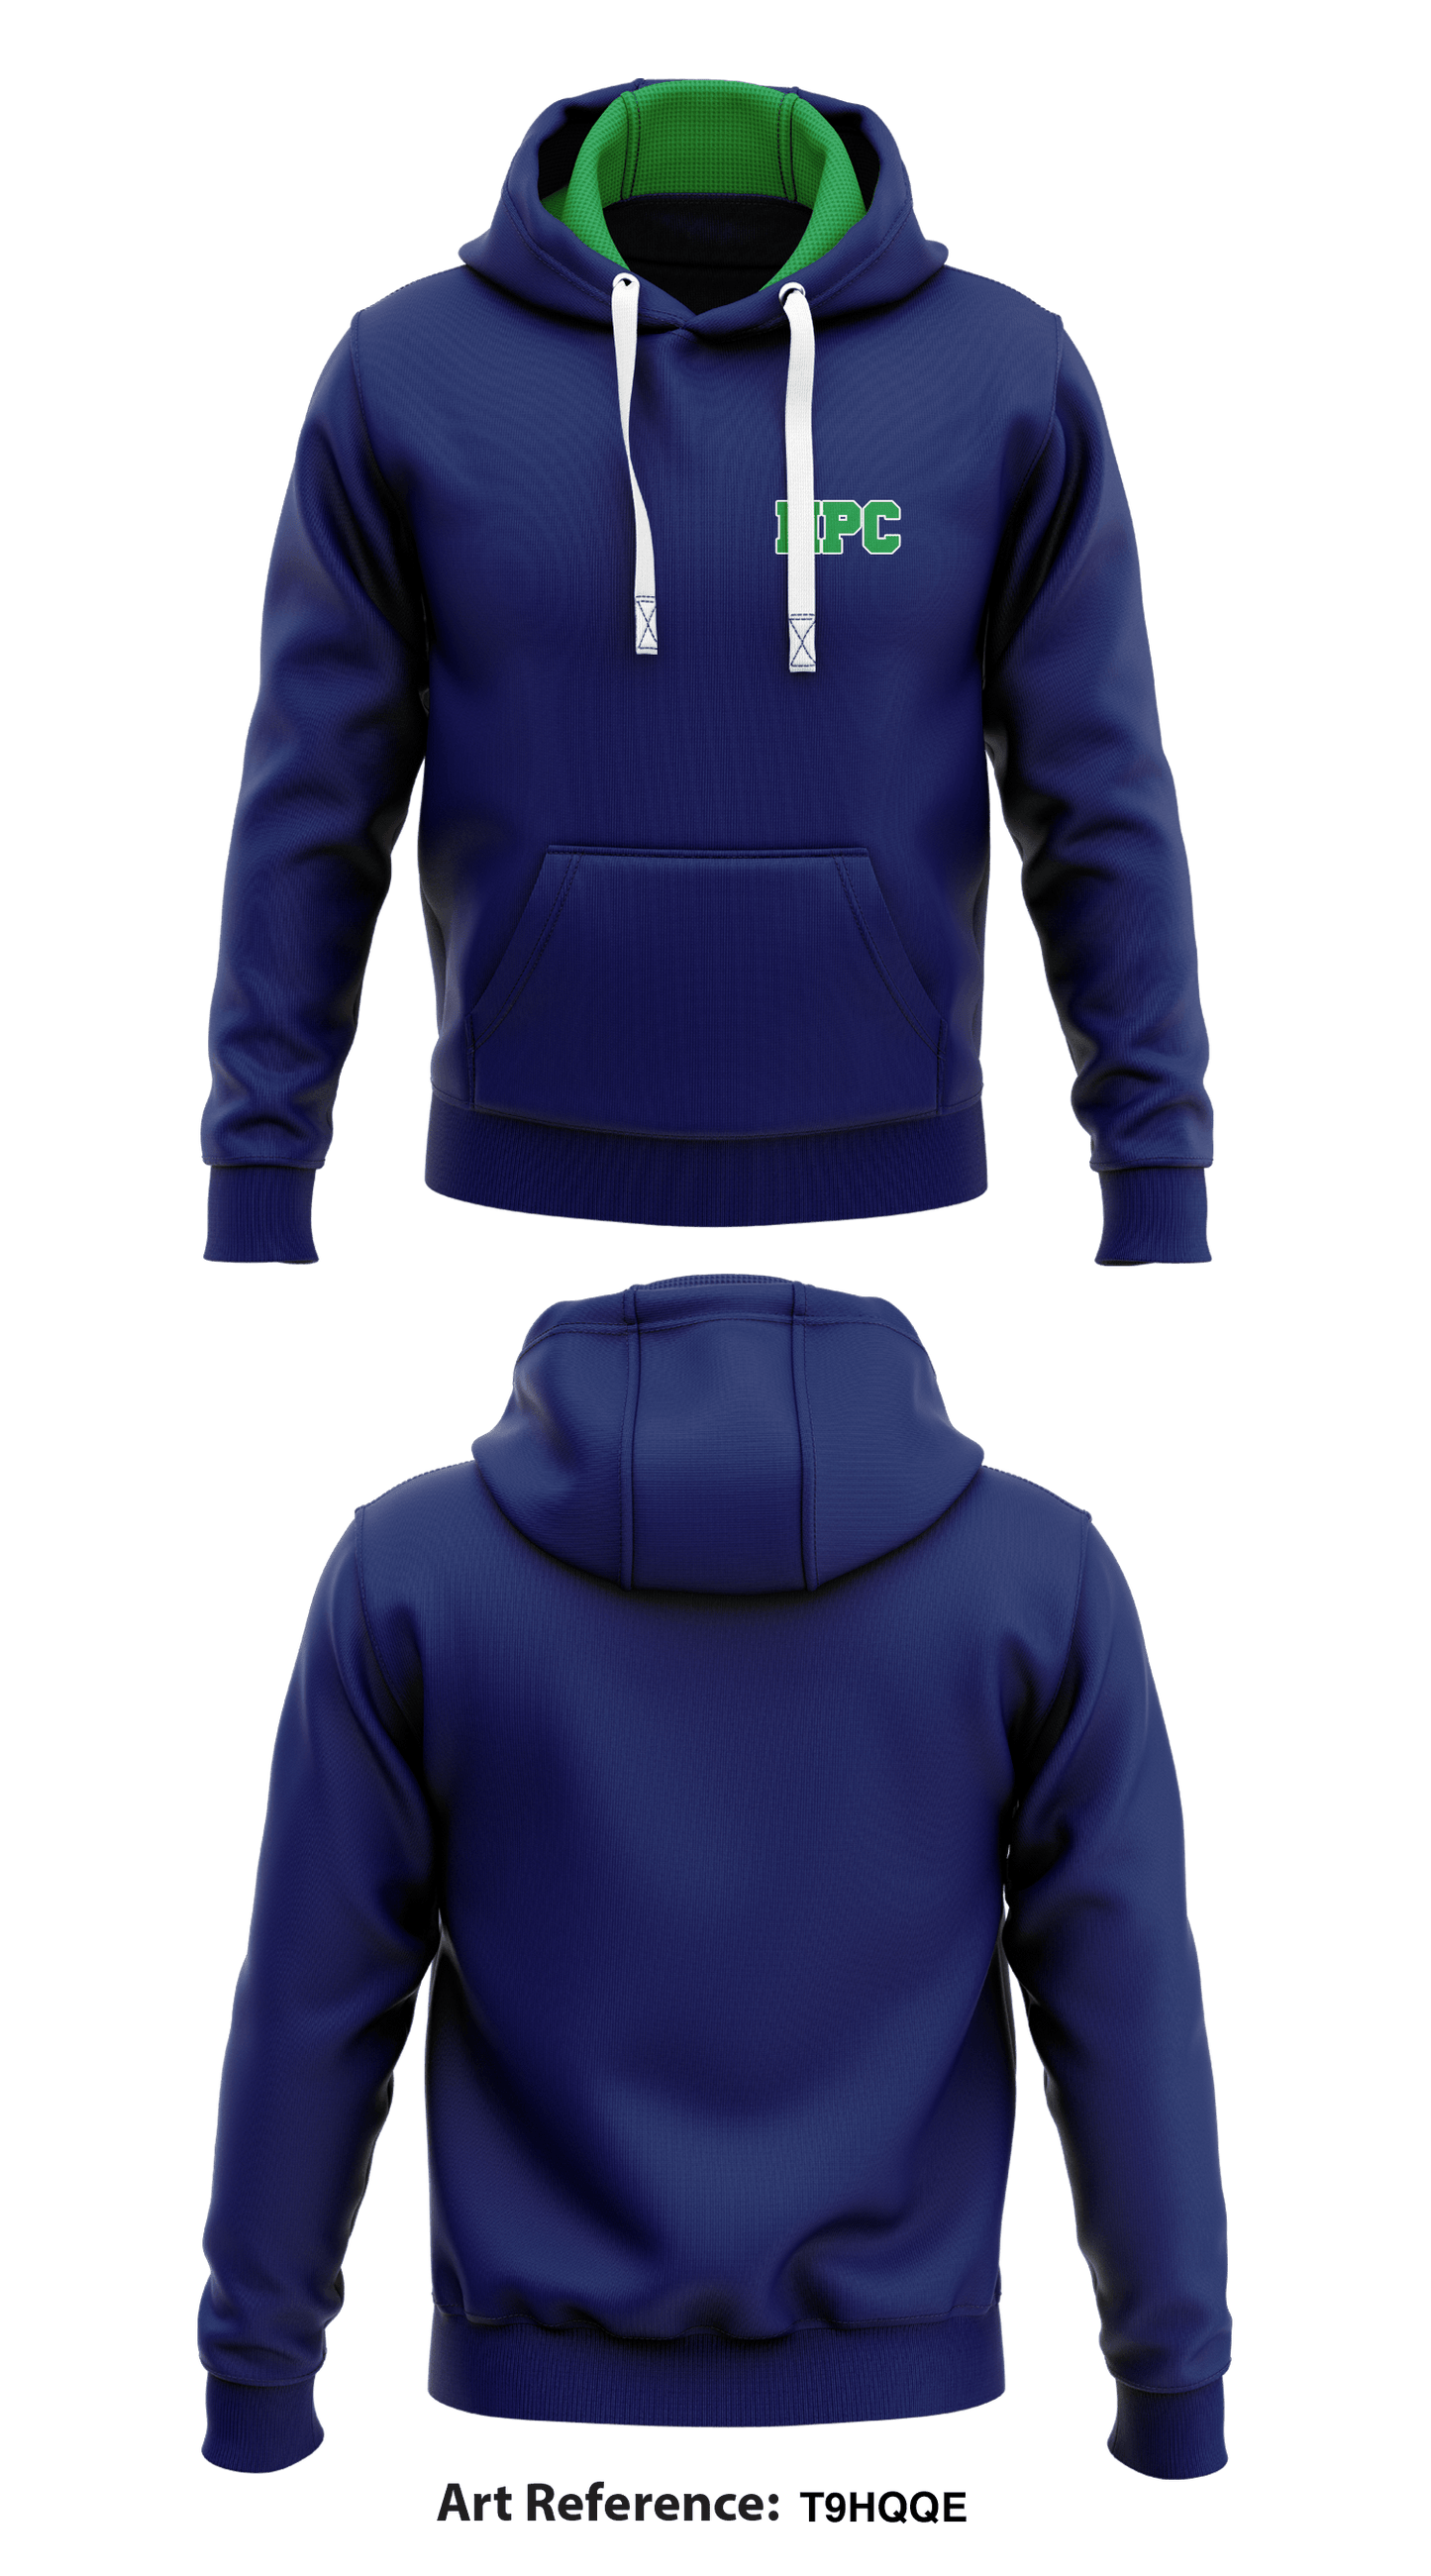 HPC Store 1  Core Men's Hooded Performance Sweatshirt - T9hQQe